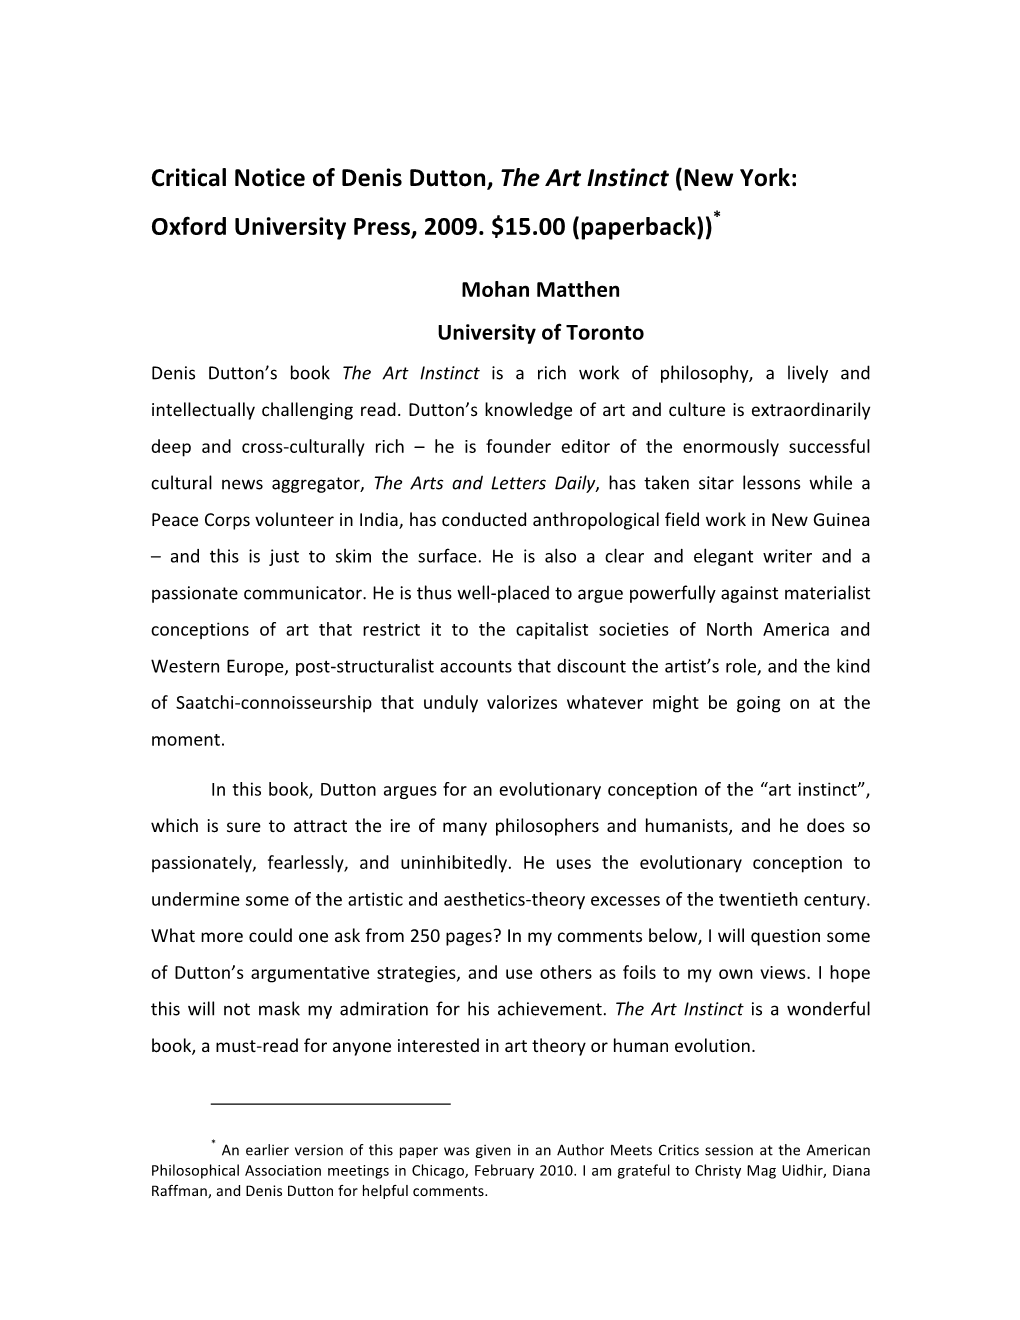 Critical Notice of Denis Dutton, the Art Instinct (New York: Oxford University Press, 2009